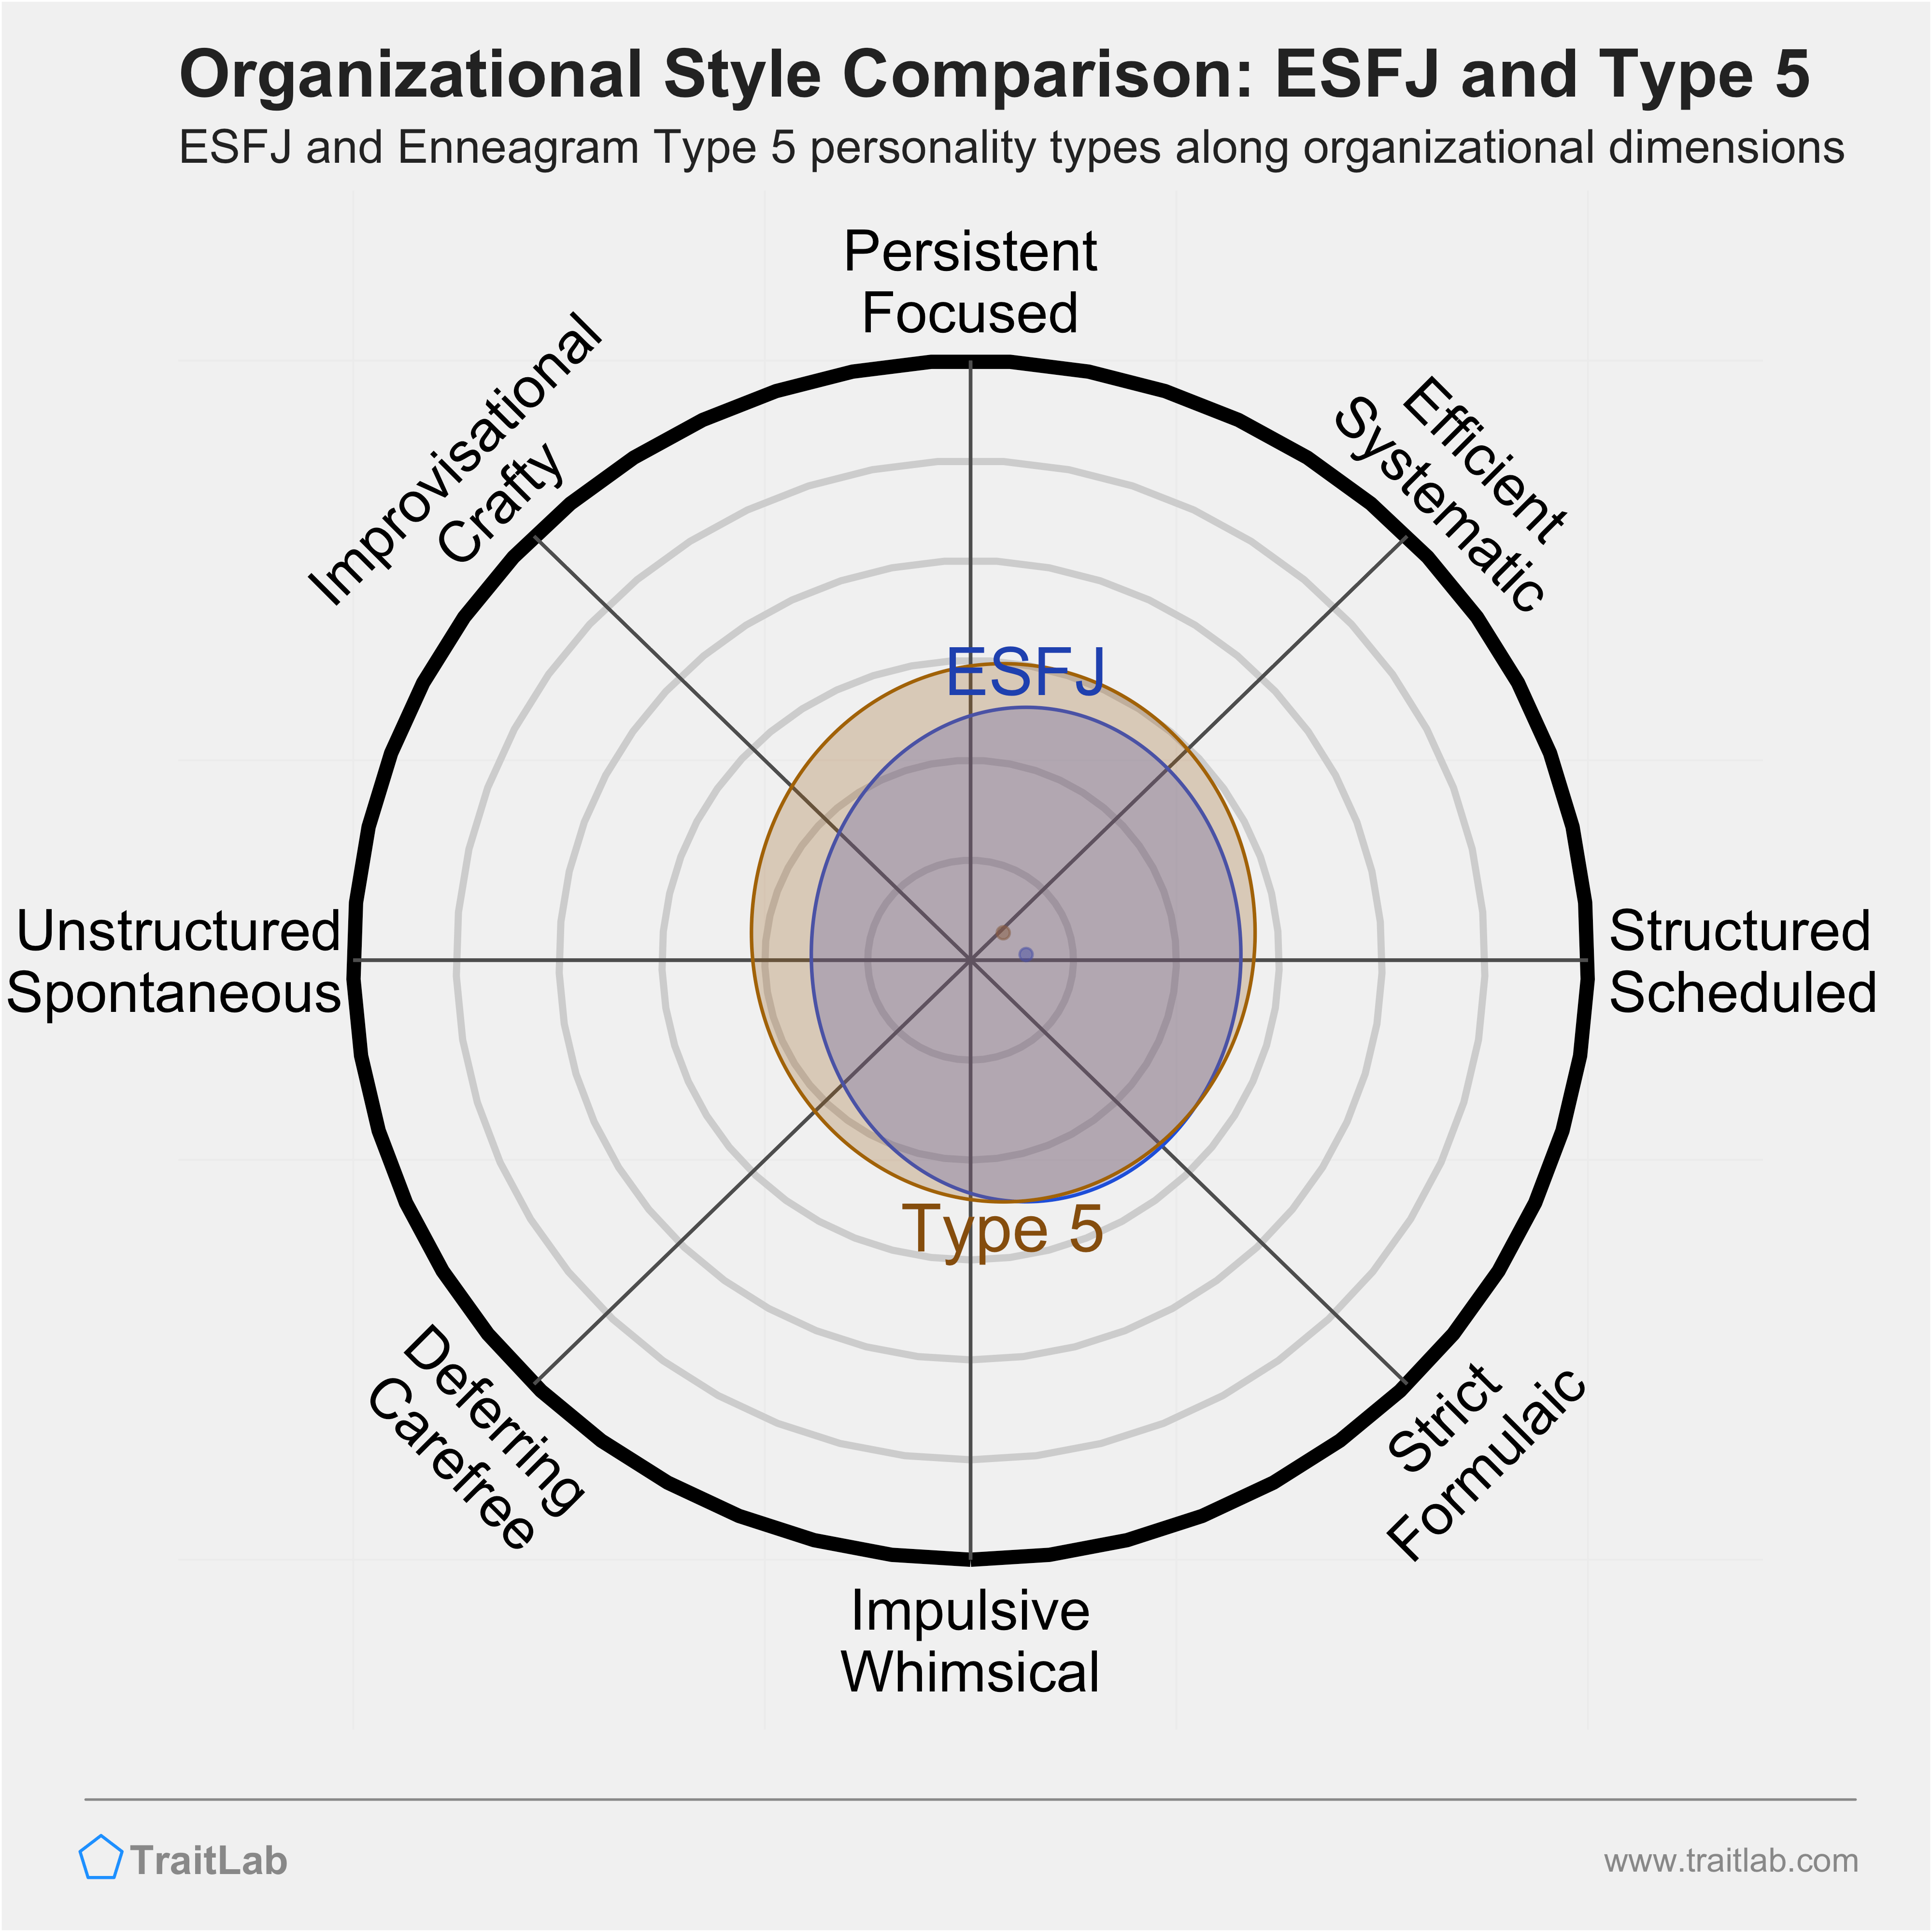 ESFJ and Type 5 comparison across organizational dimensions